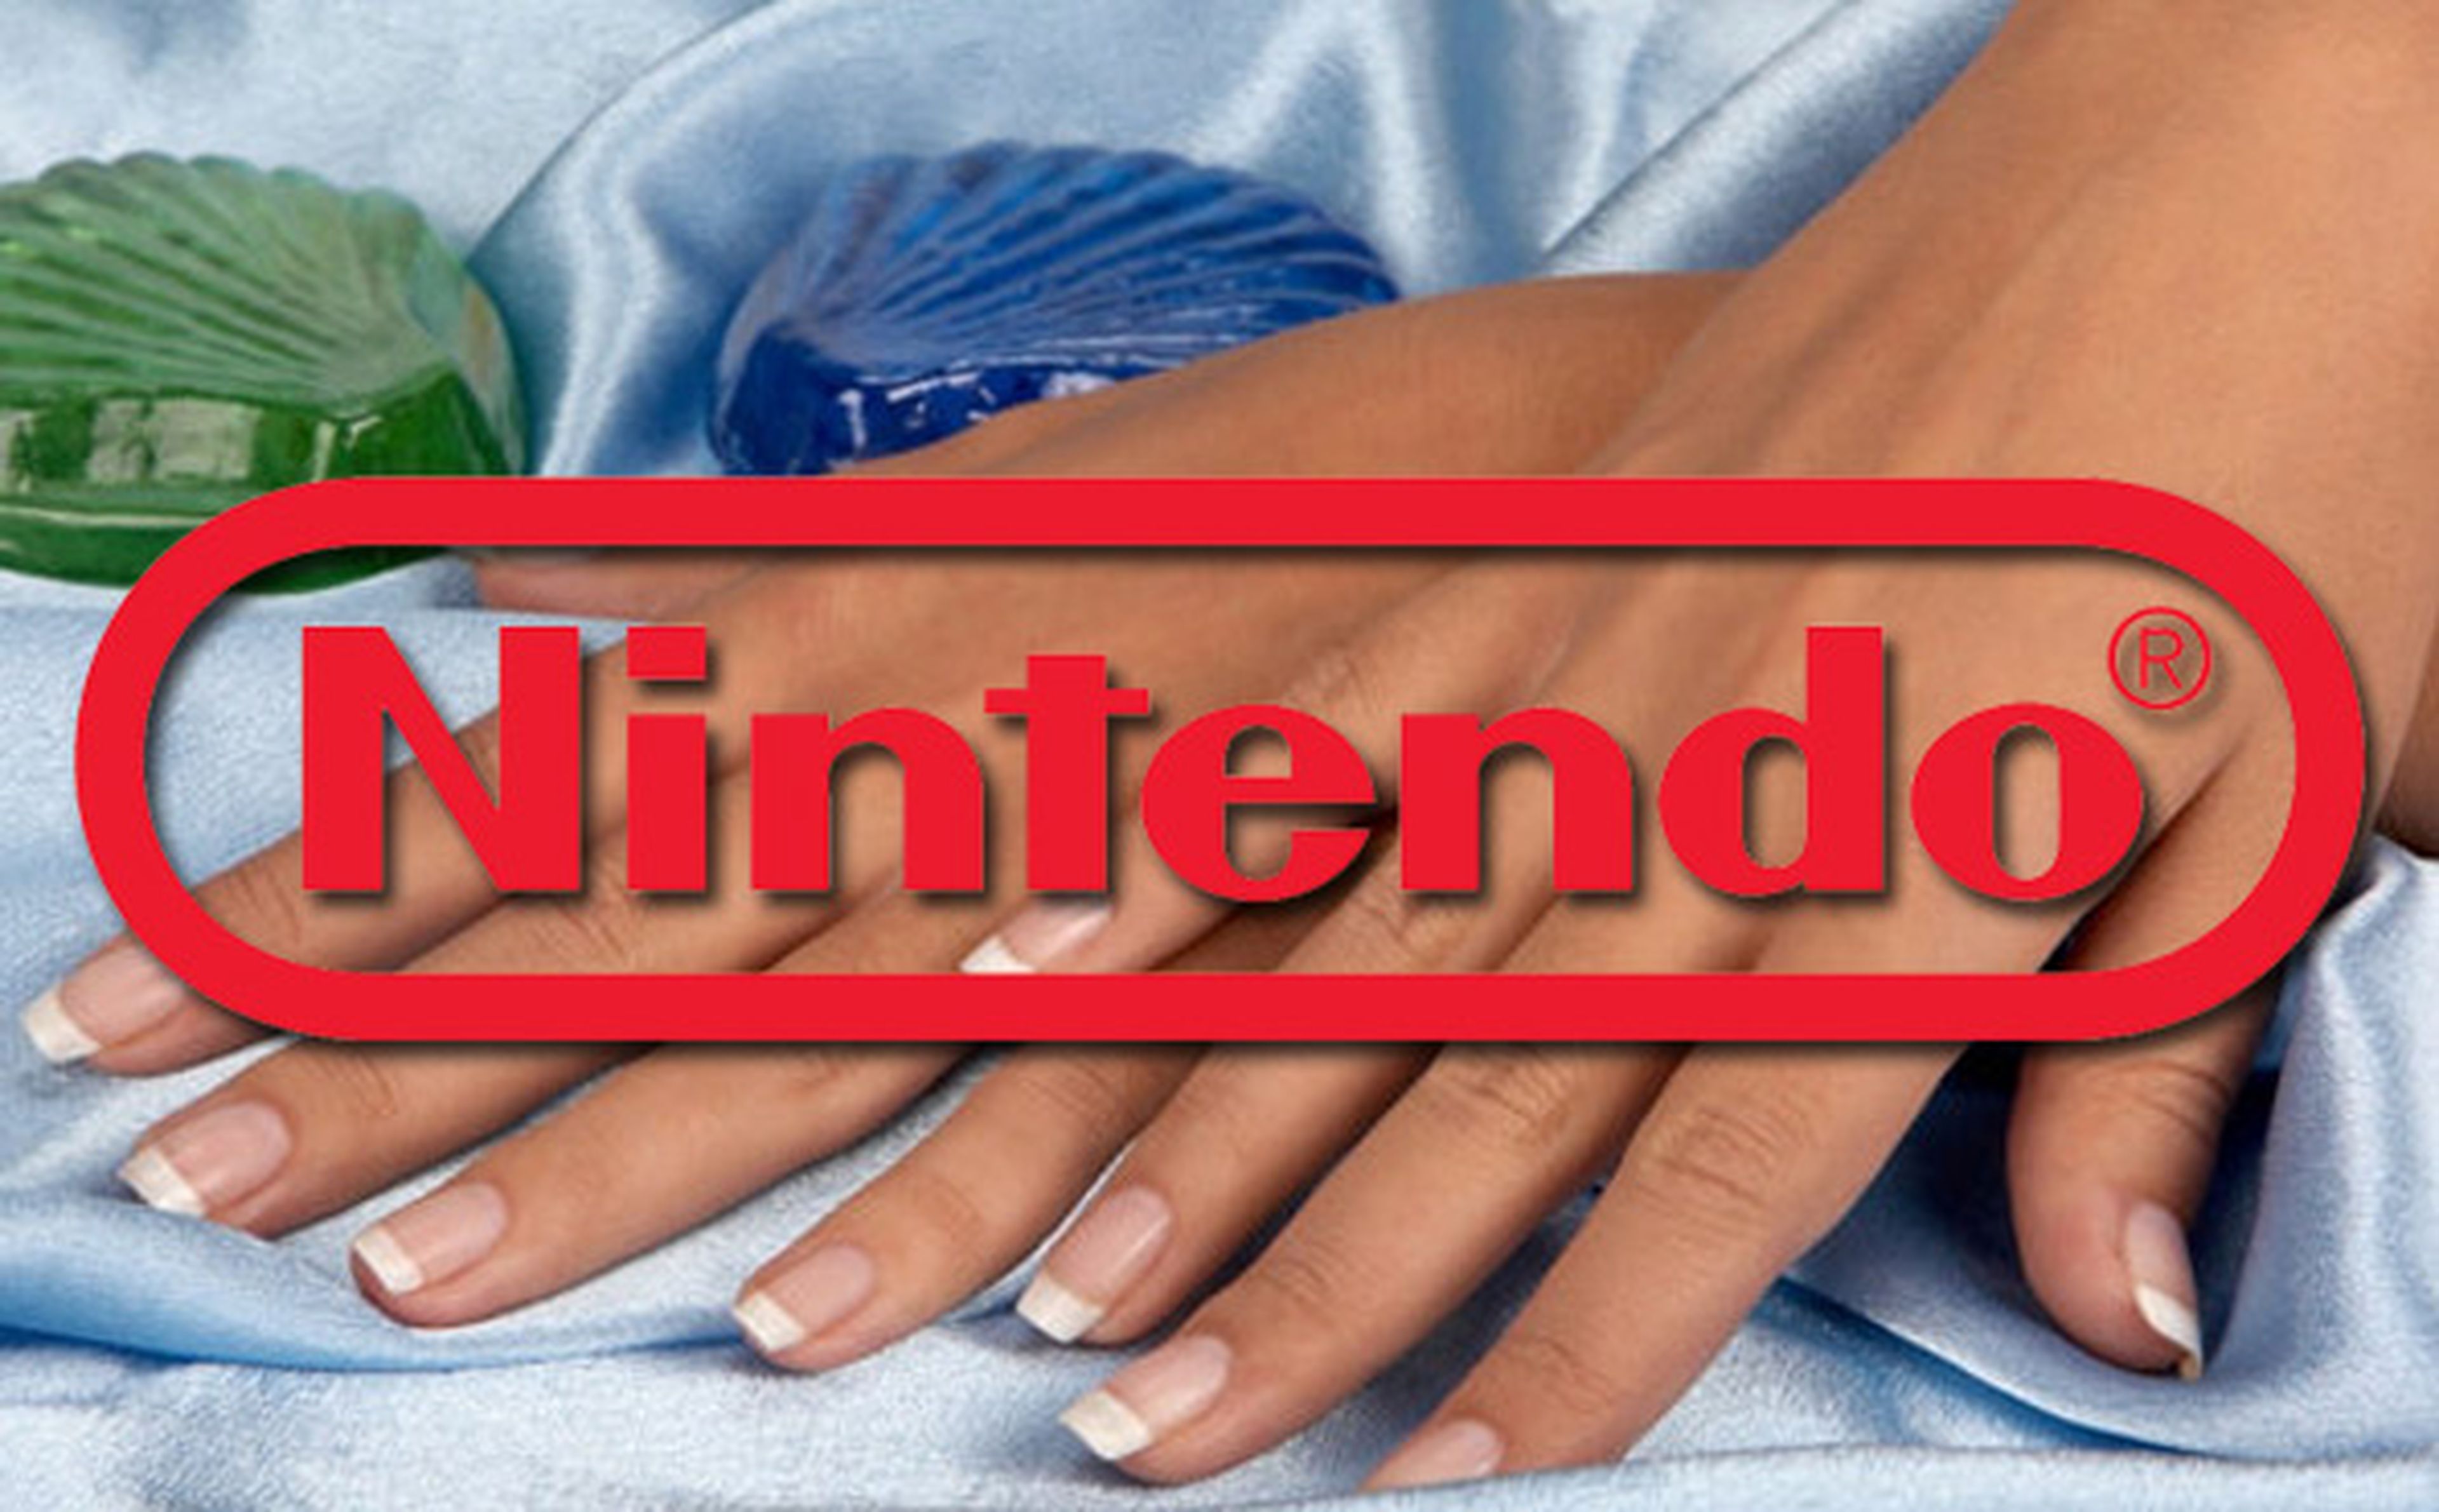 Nintendo busca modelos de manos